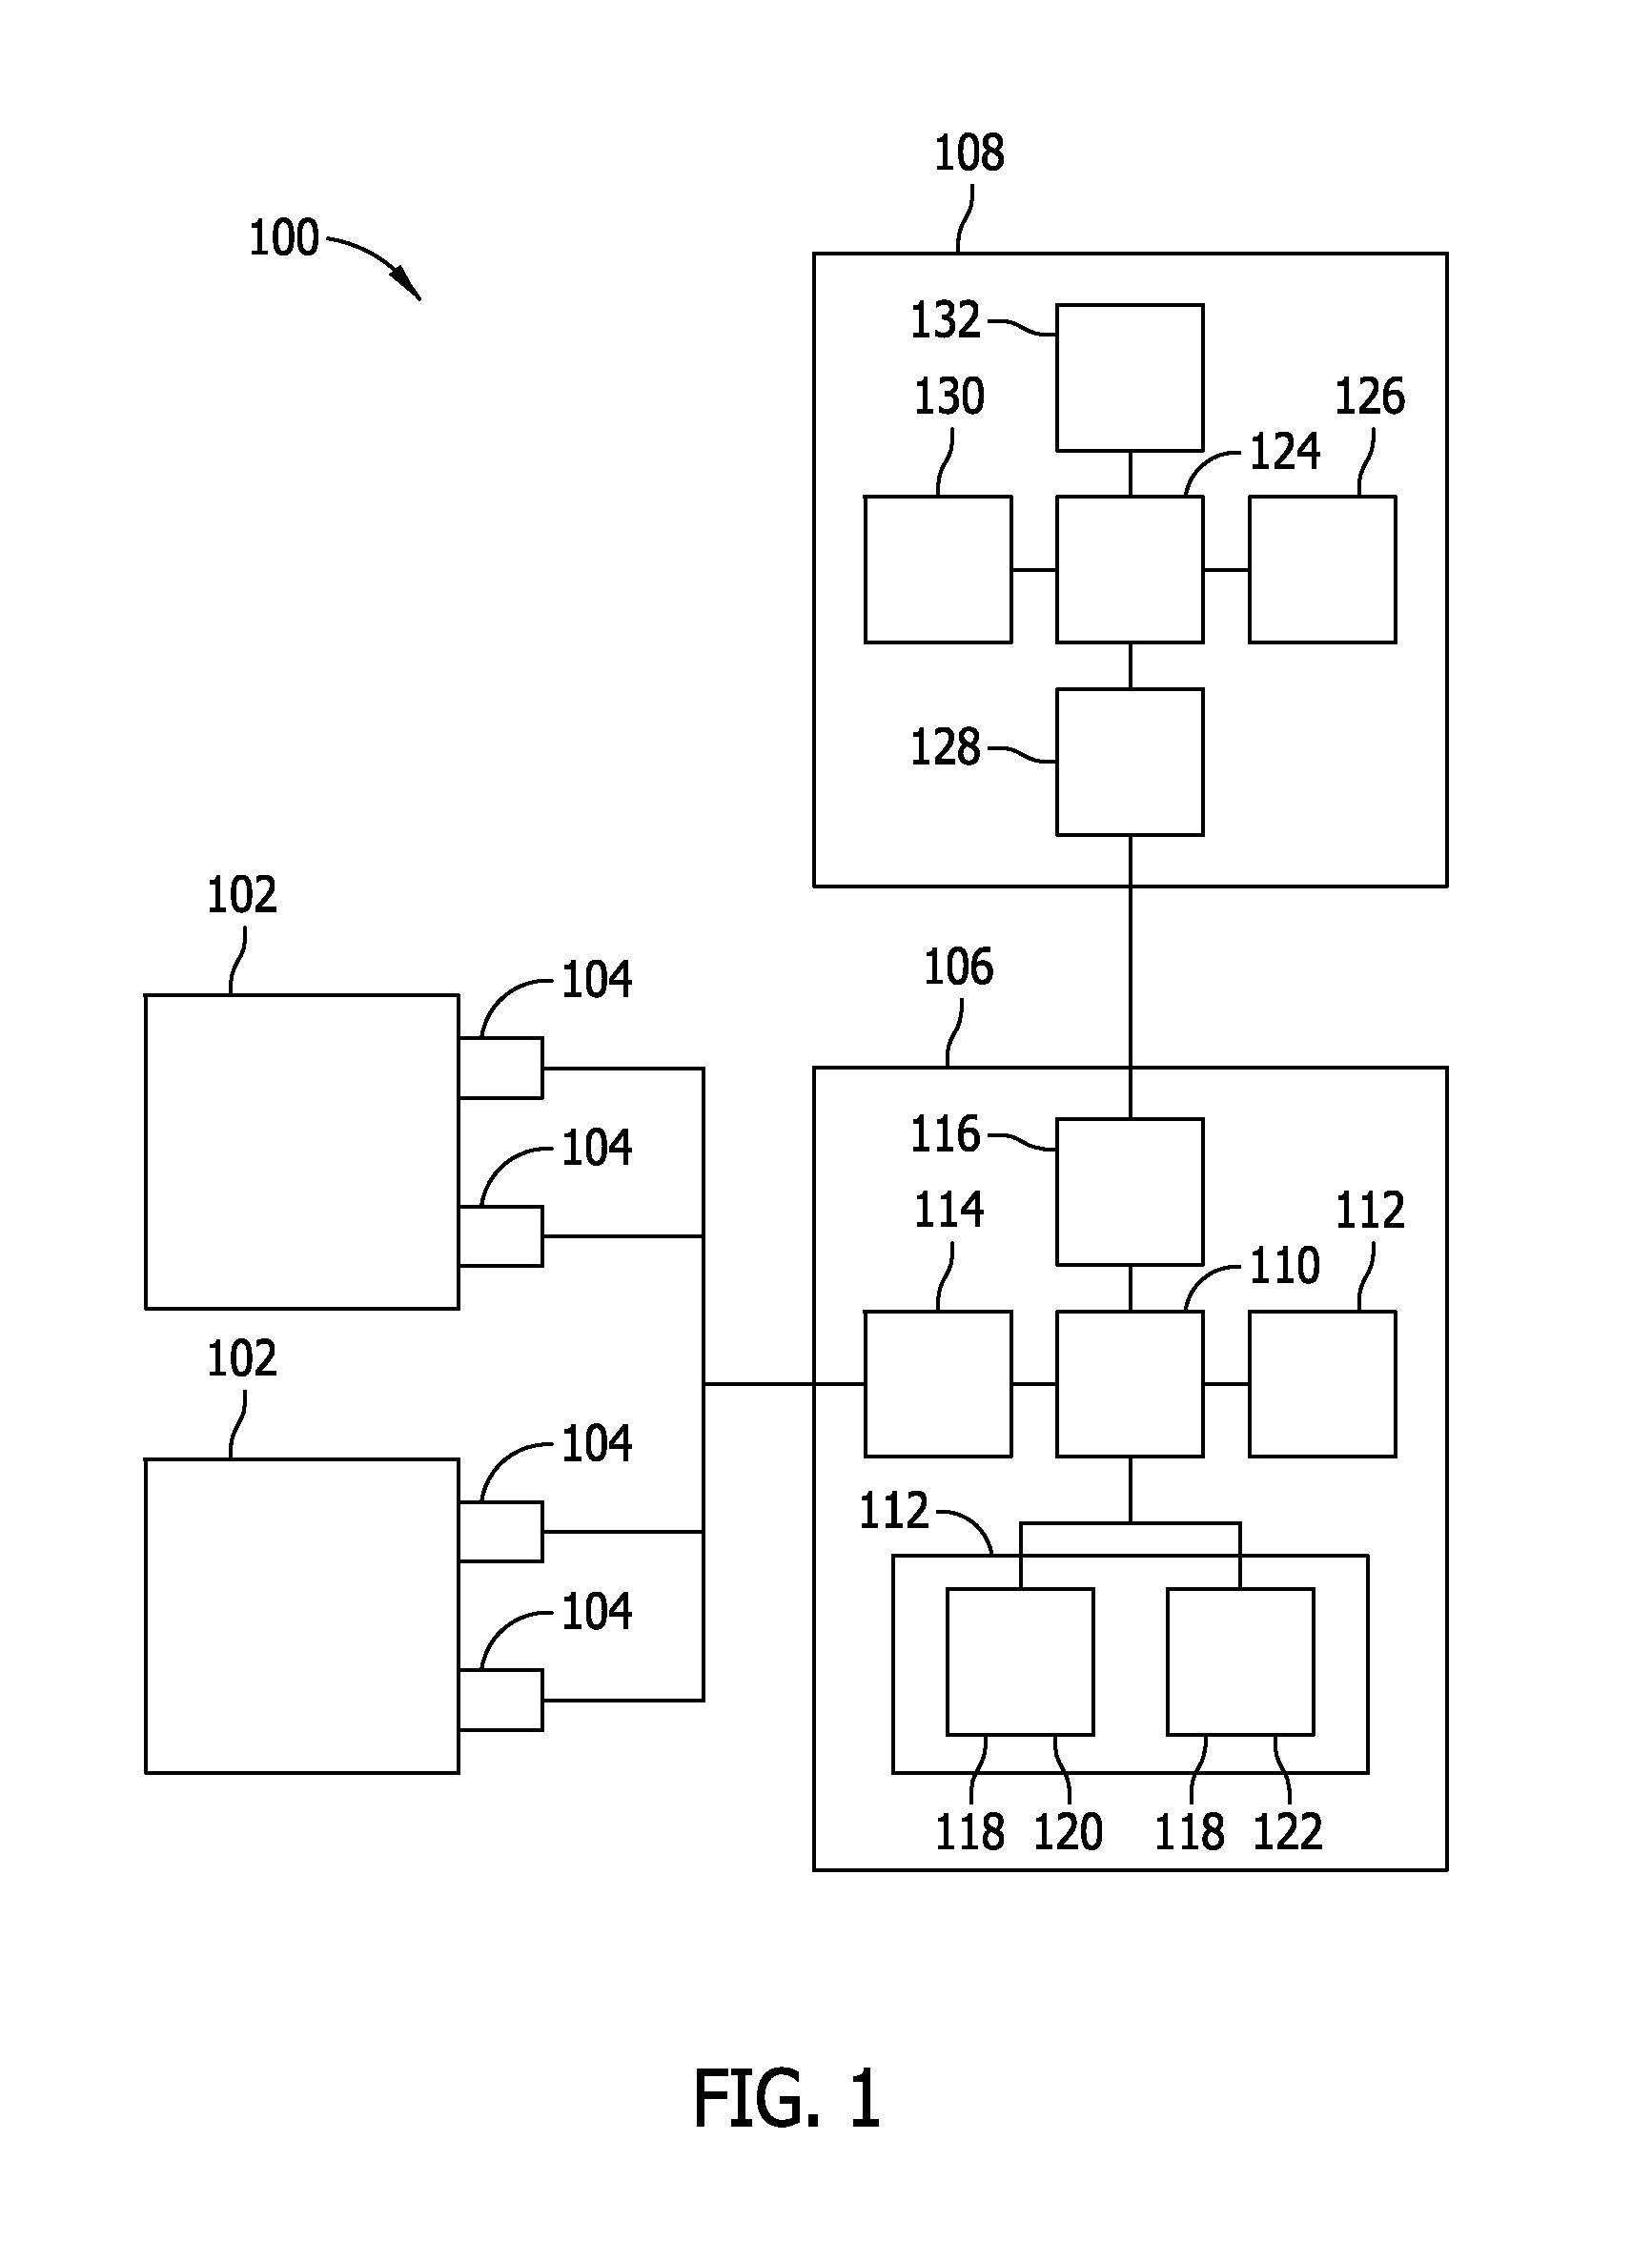 acs550 wiring diagram